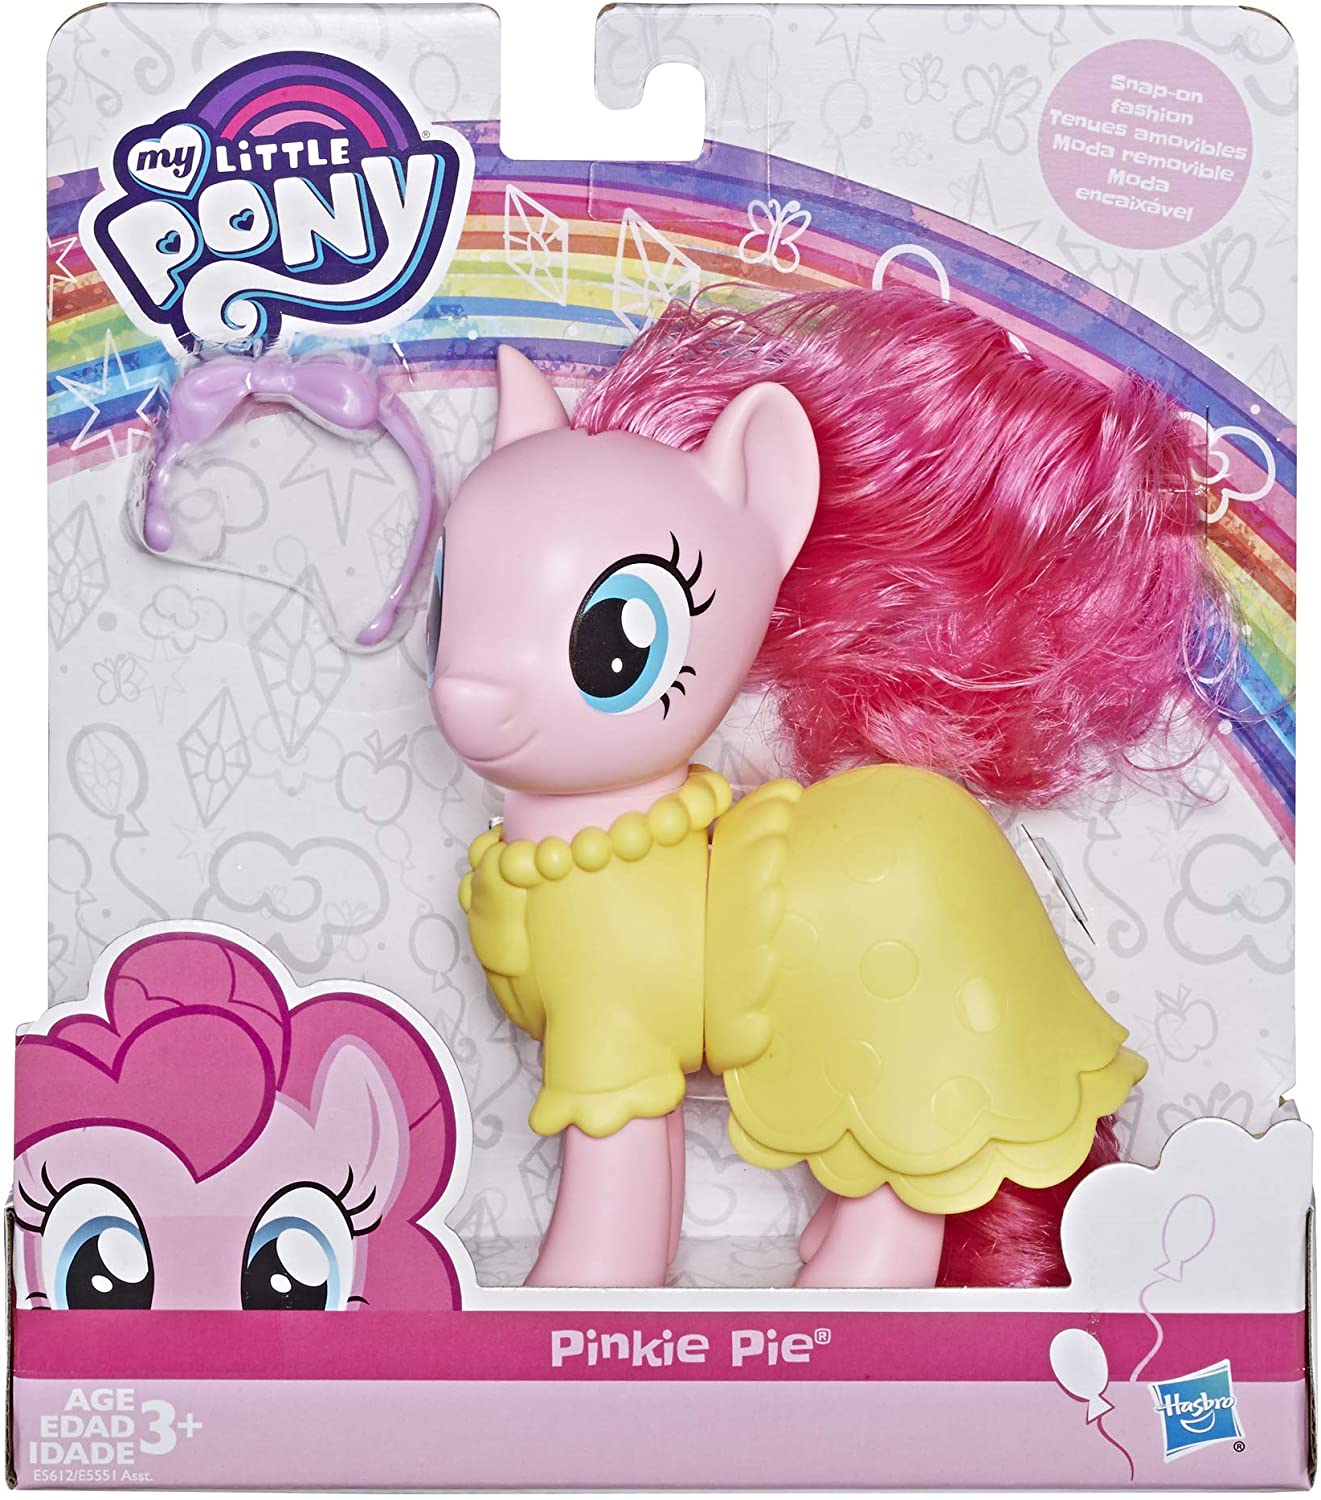 MLP Pinkie Pie Snap-On Fashion Figure 1